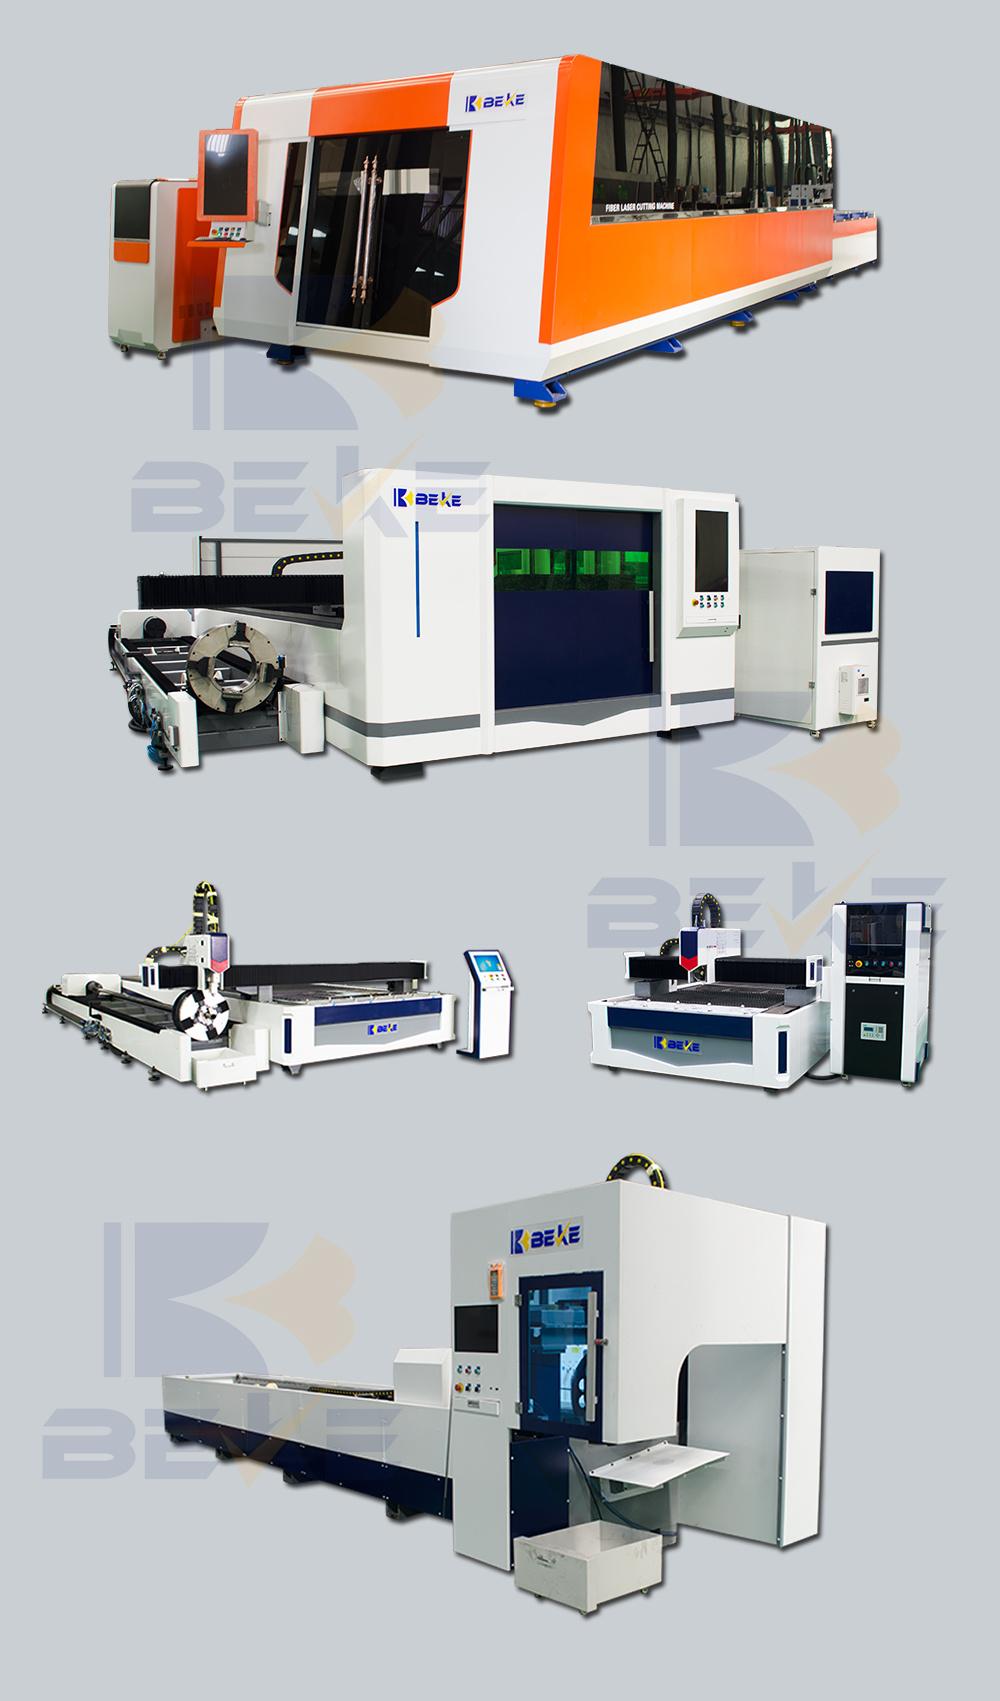 Beke CNC Ss Sheet Fiber Laser Cutting Machine Factory Outlet